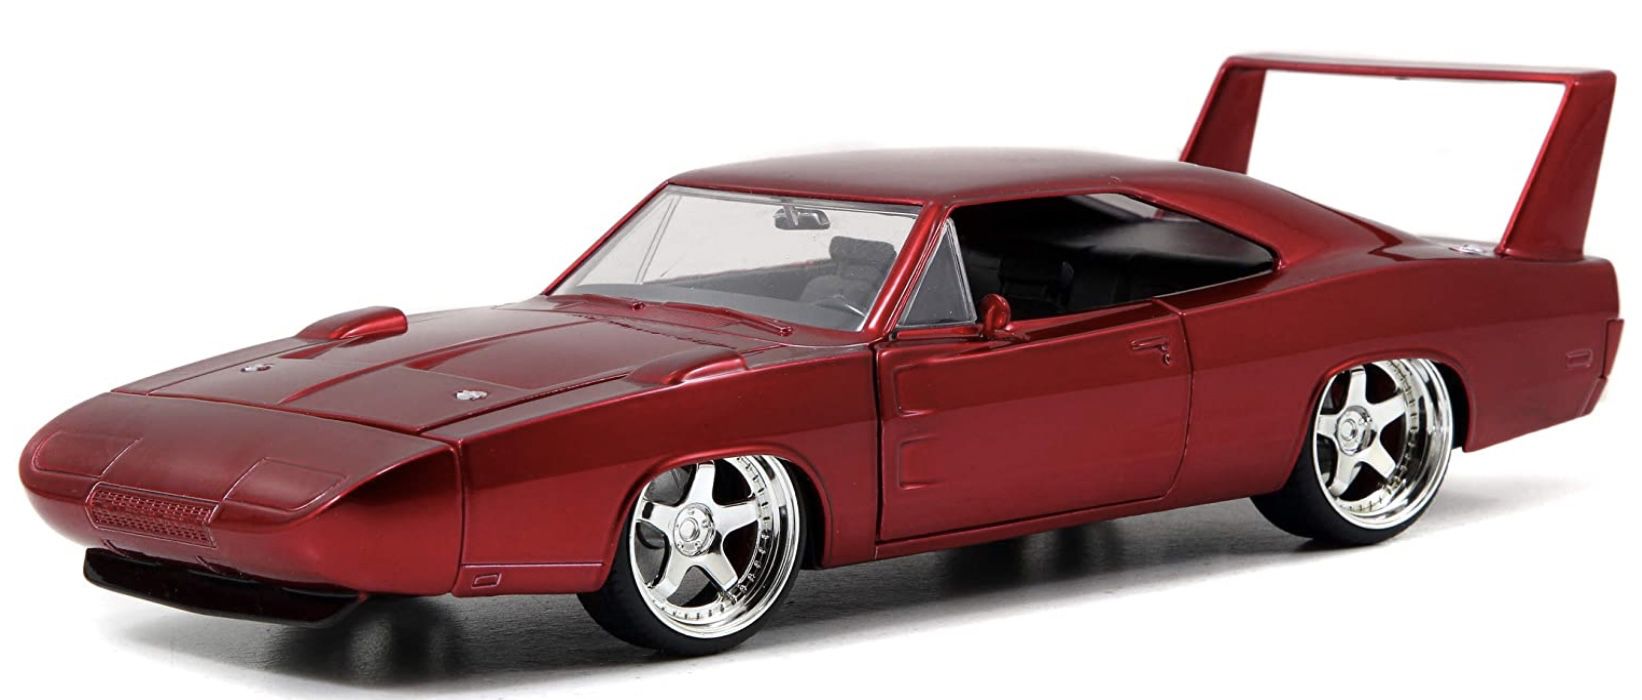 Jada Toys Fast & Furious Doms 1969 Dodge Charger Daytona im Maßstab 1:24 für 21,06€ (statt 30€)   Prime